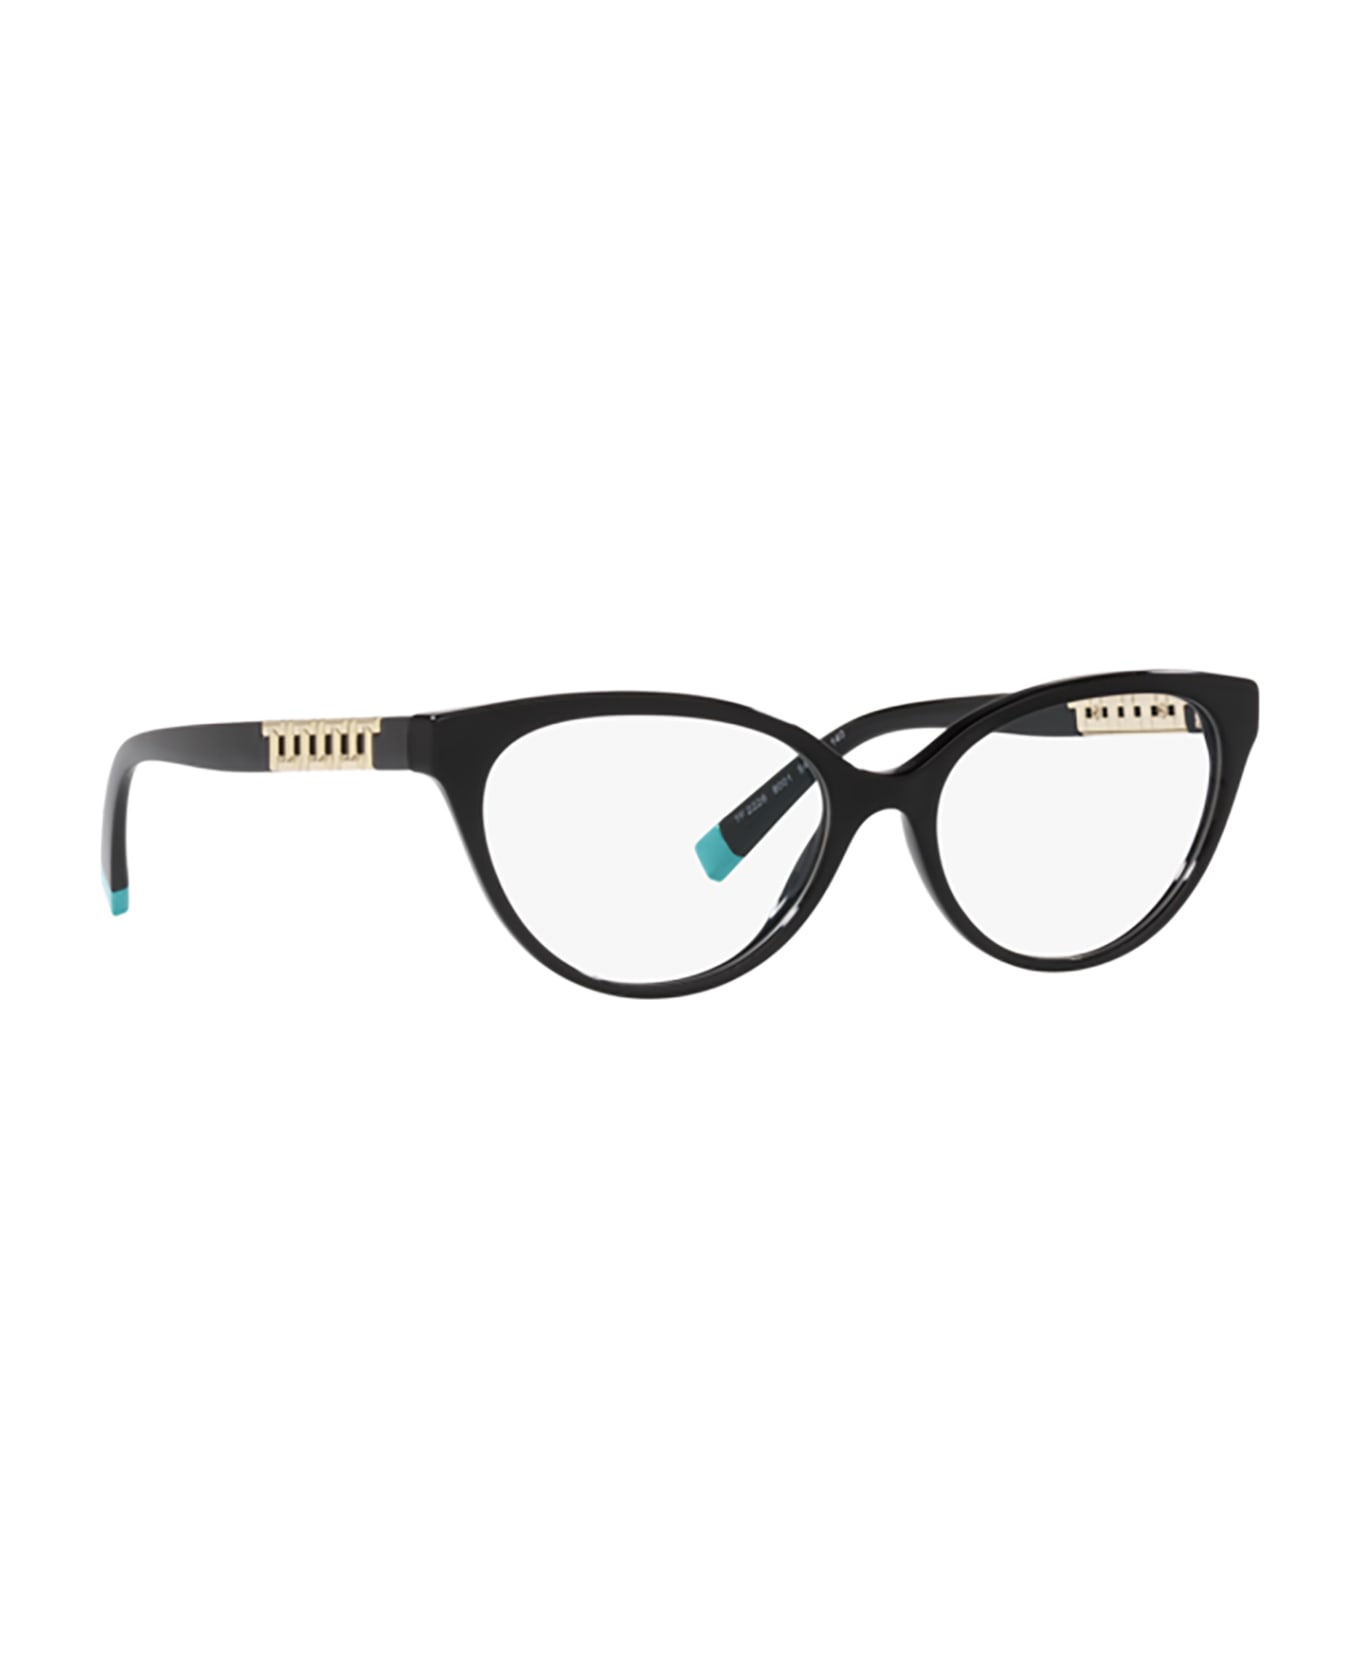 Tiffany & Co. Tf2226 Black Glasses - Black